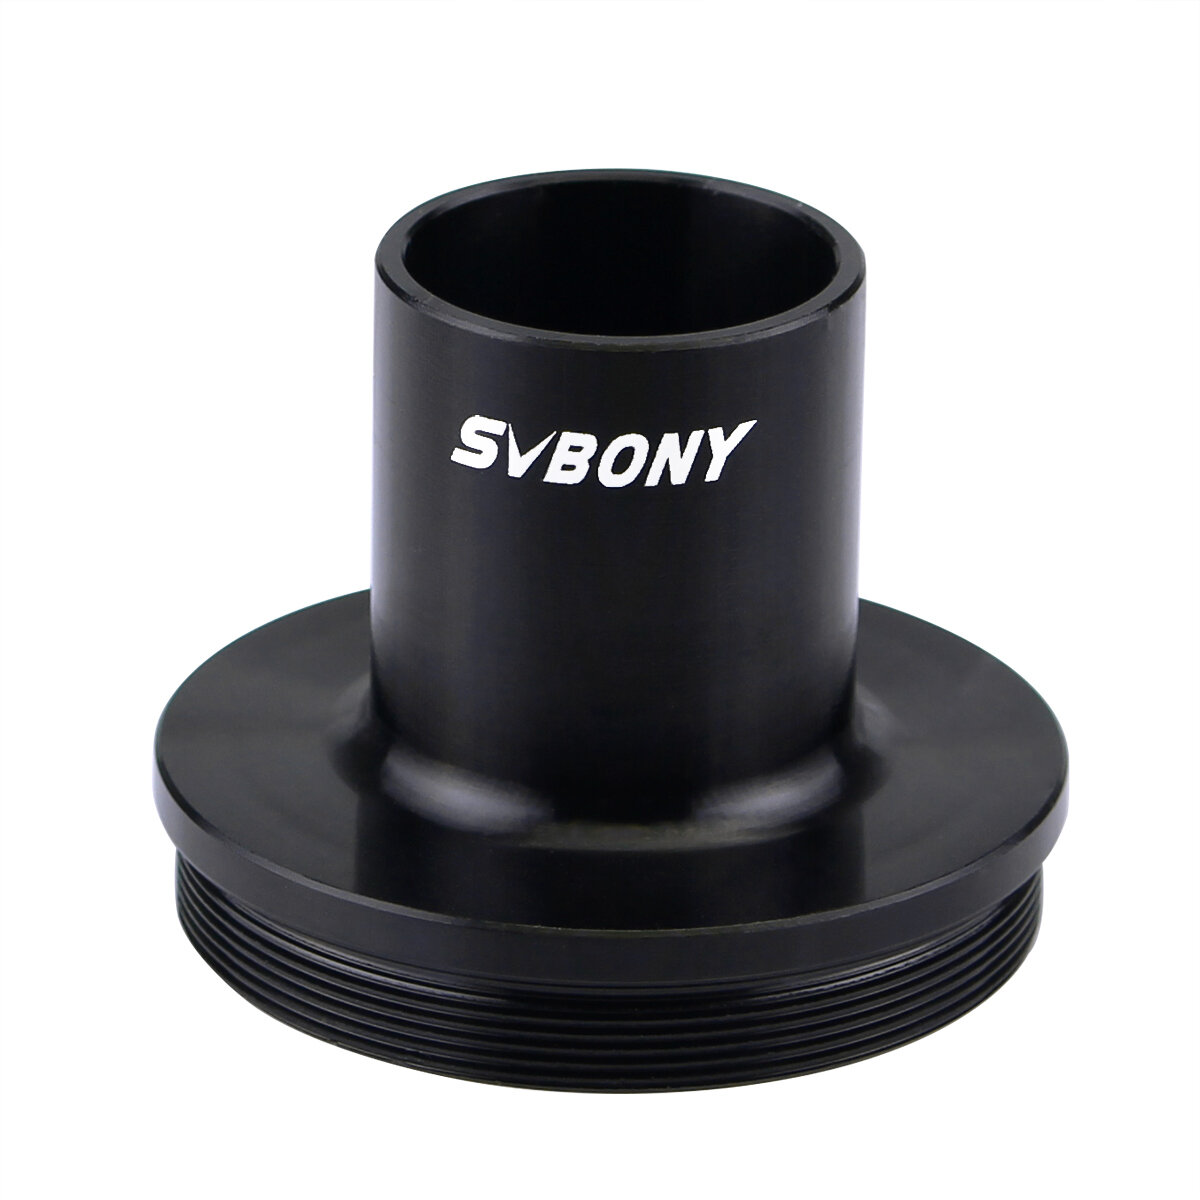 

SVBONY Top Microscope T Adapter камера Адаптер для микроскопов Стандартный окуляр 23,2 мм